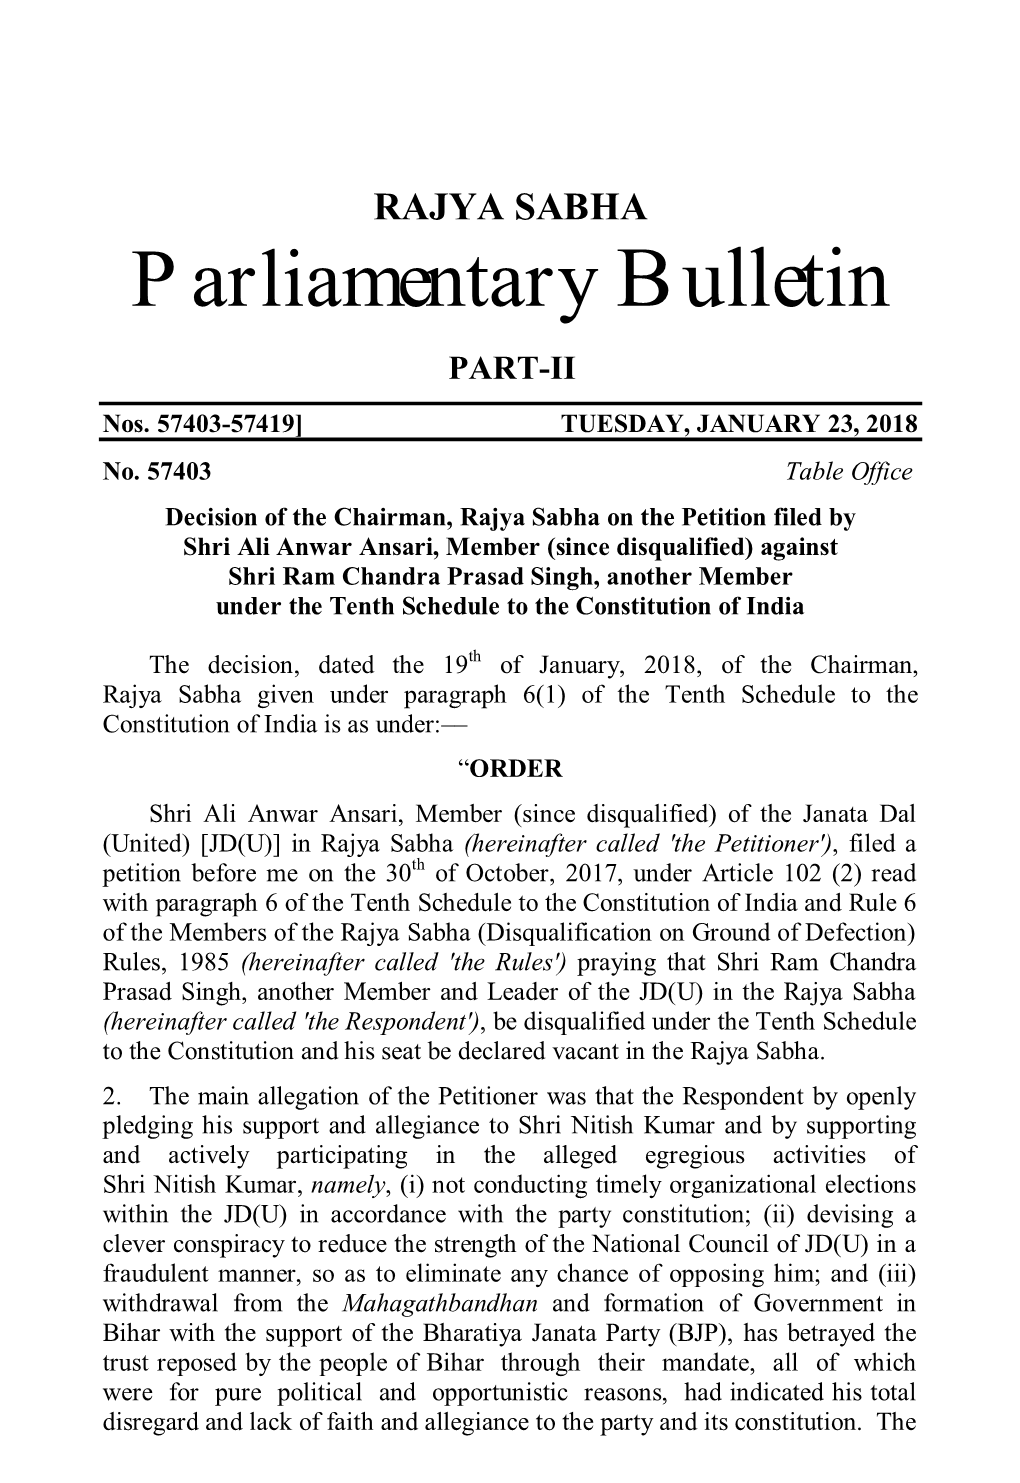 Parliamentary Bulletin Part II No